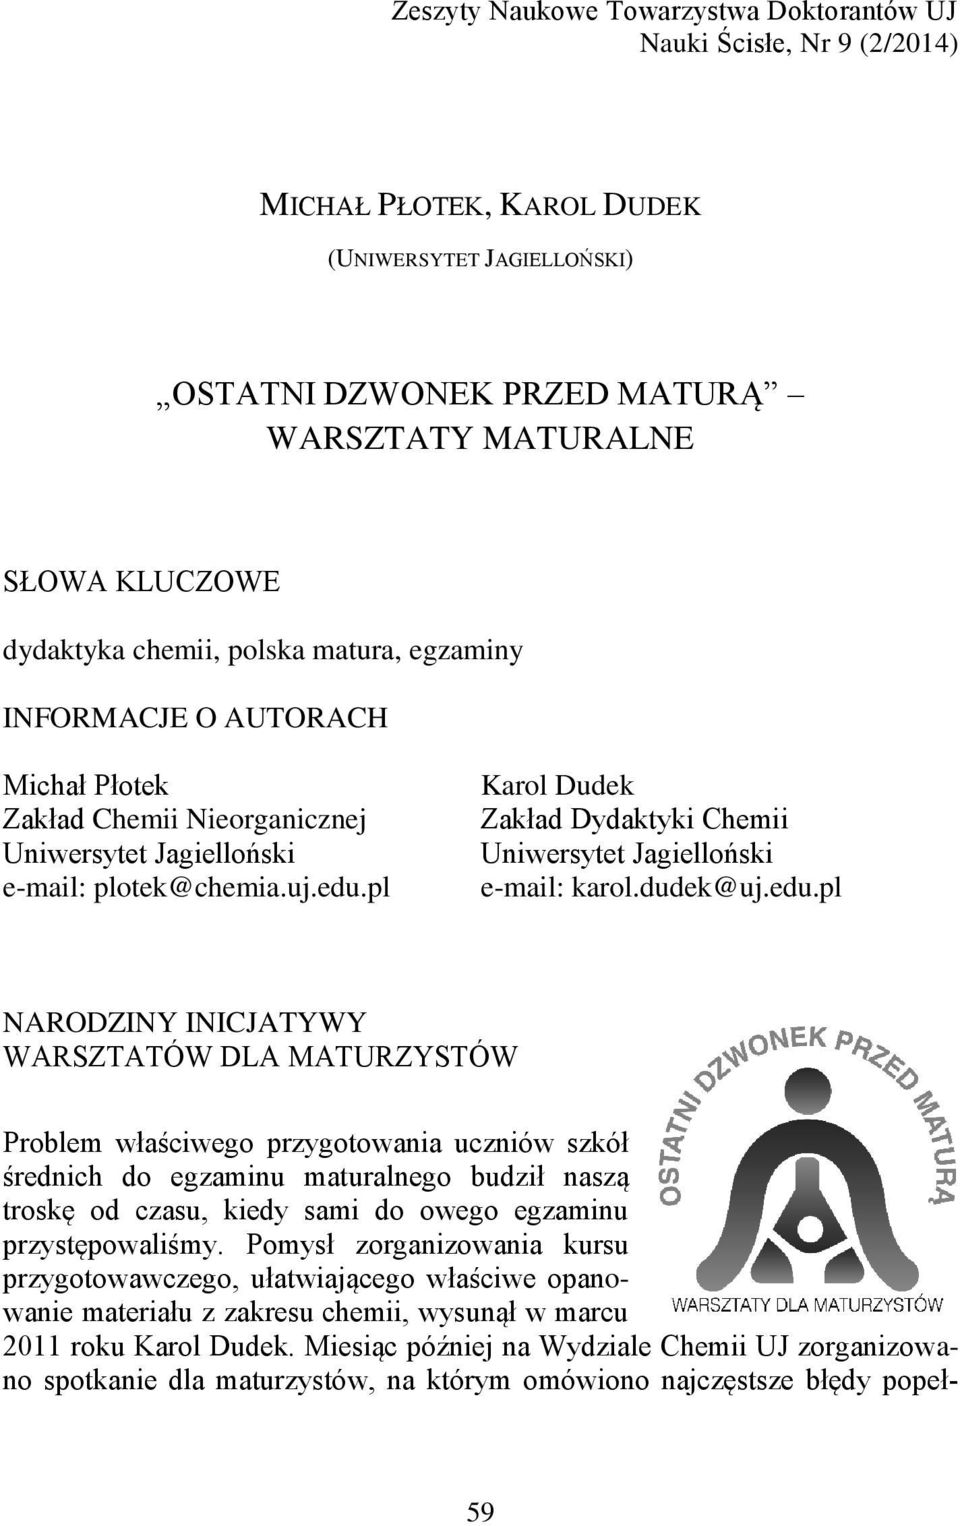 pl Karol Dudek Zakład Dydaktyki Chemii Uniwersytet Jagielloński e-mail: karol.dudek@uj.edu.